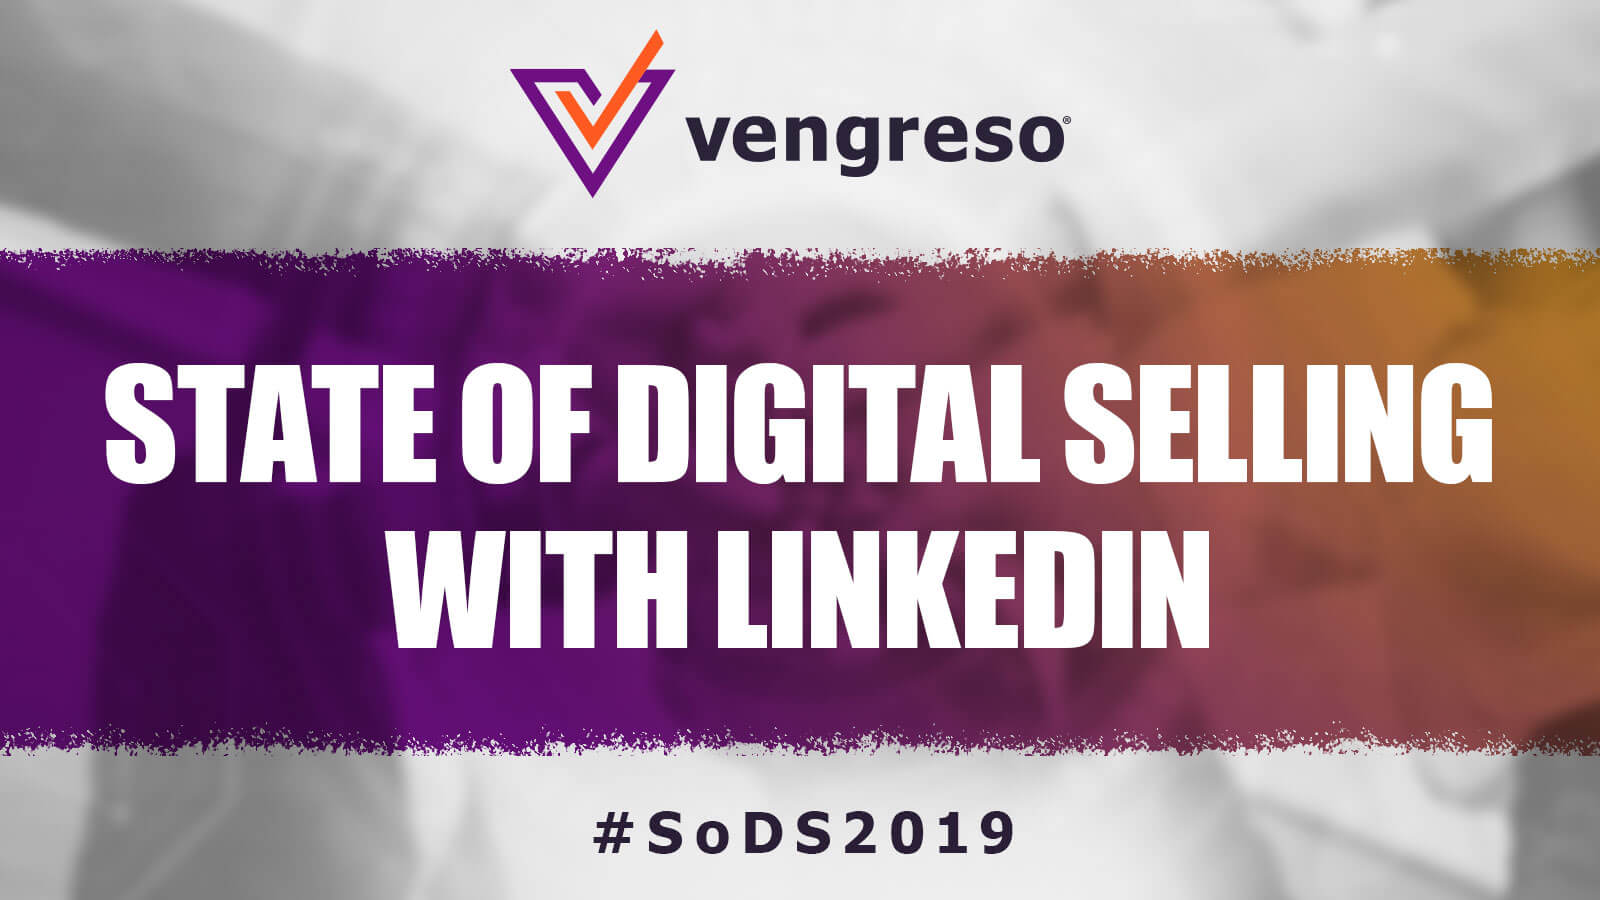 Vengreso publishes LinkedIn's State of Digital Selling in 2019.